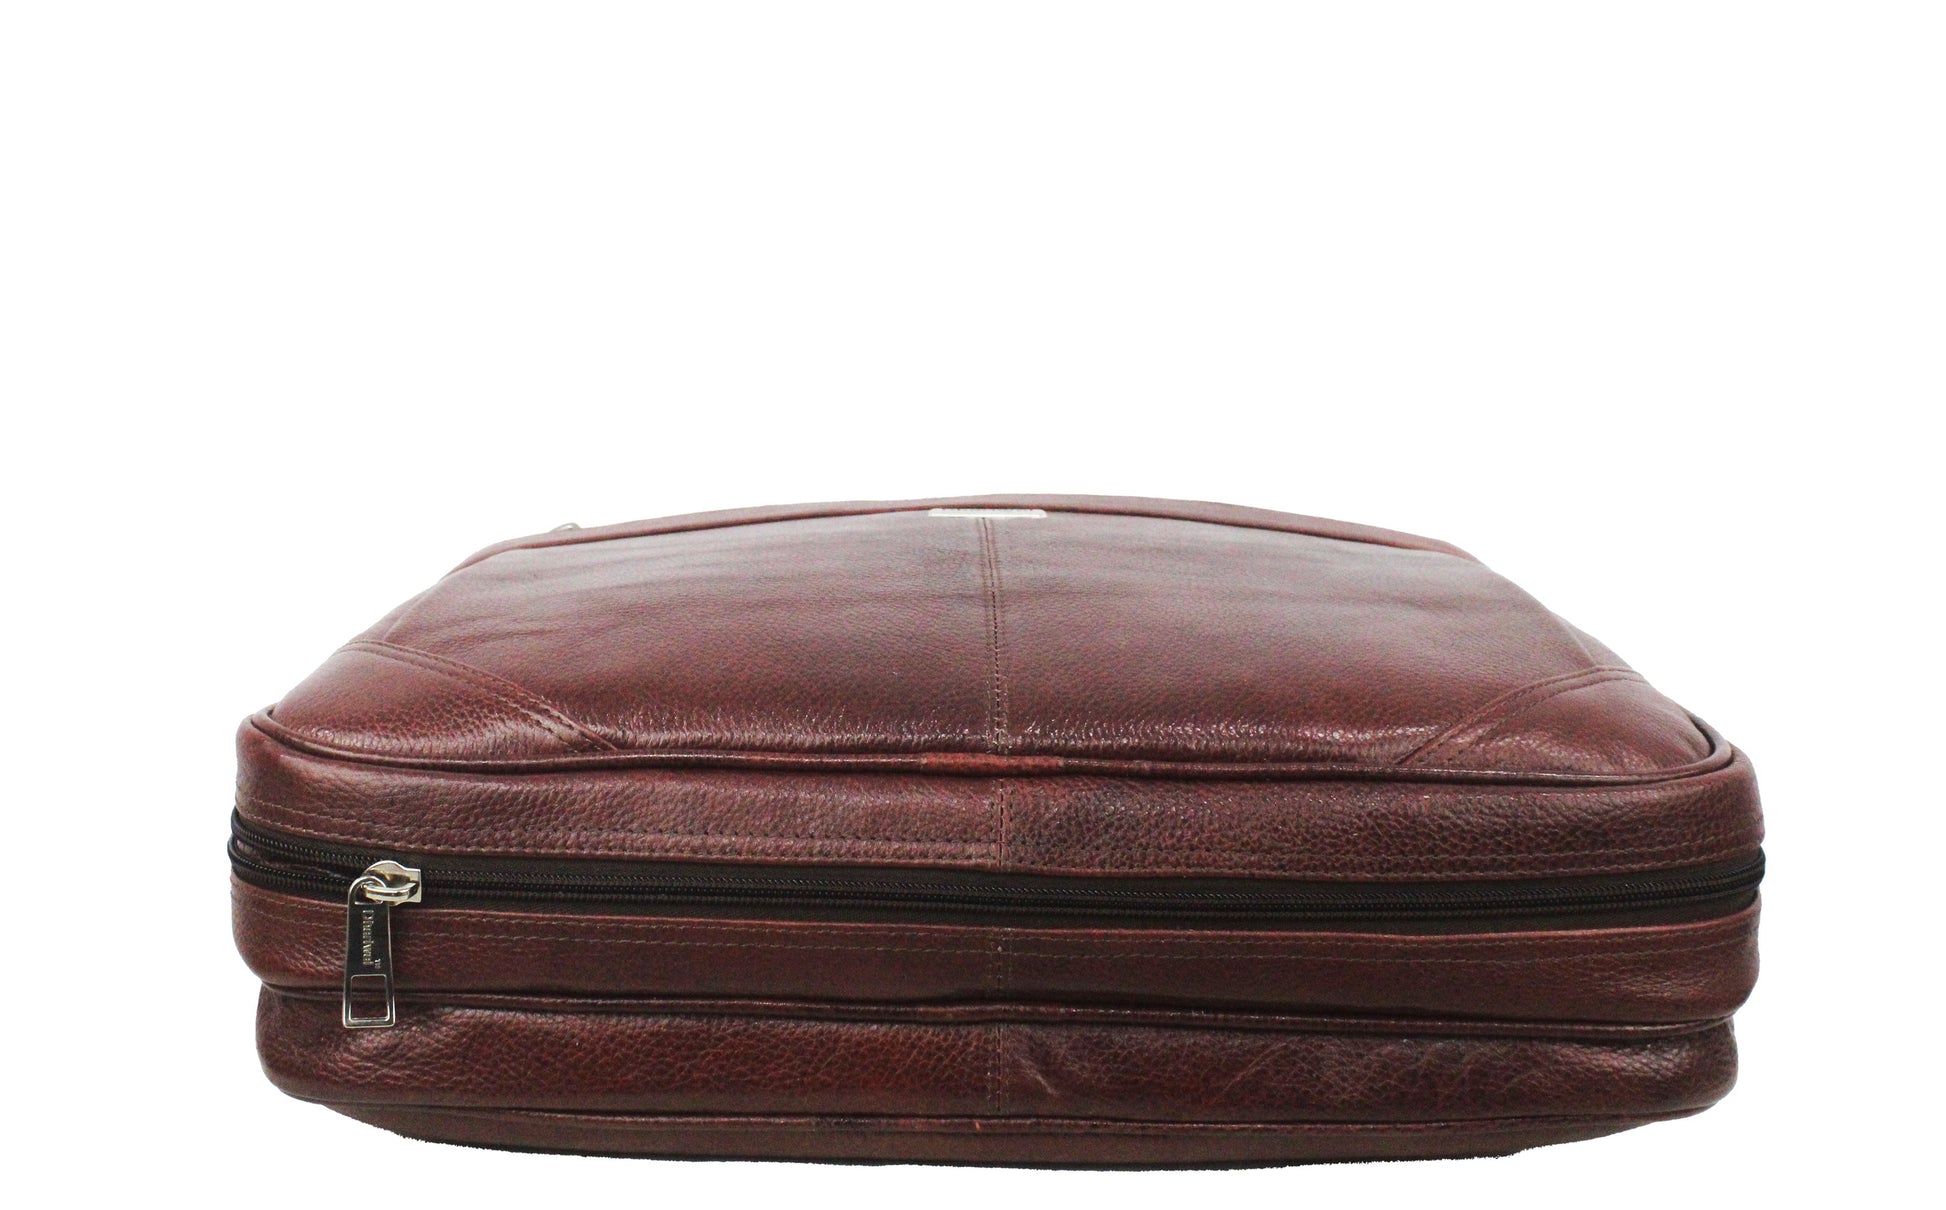 Dhariwal Genuine Leather Laptop Bag File Messenger Bag with Strap upto 15 Inch | Laptop Bag for Men EB-615 Executive Bags Dhariwal 